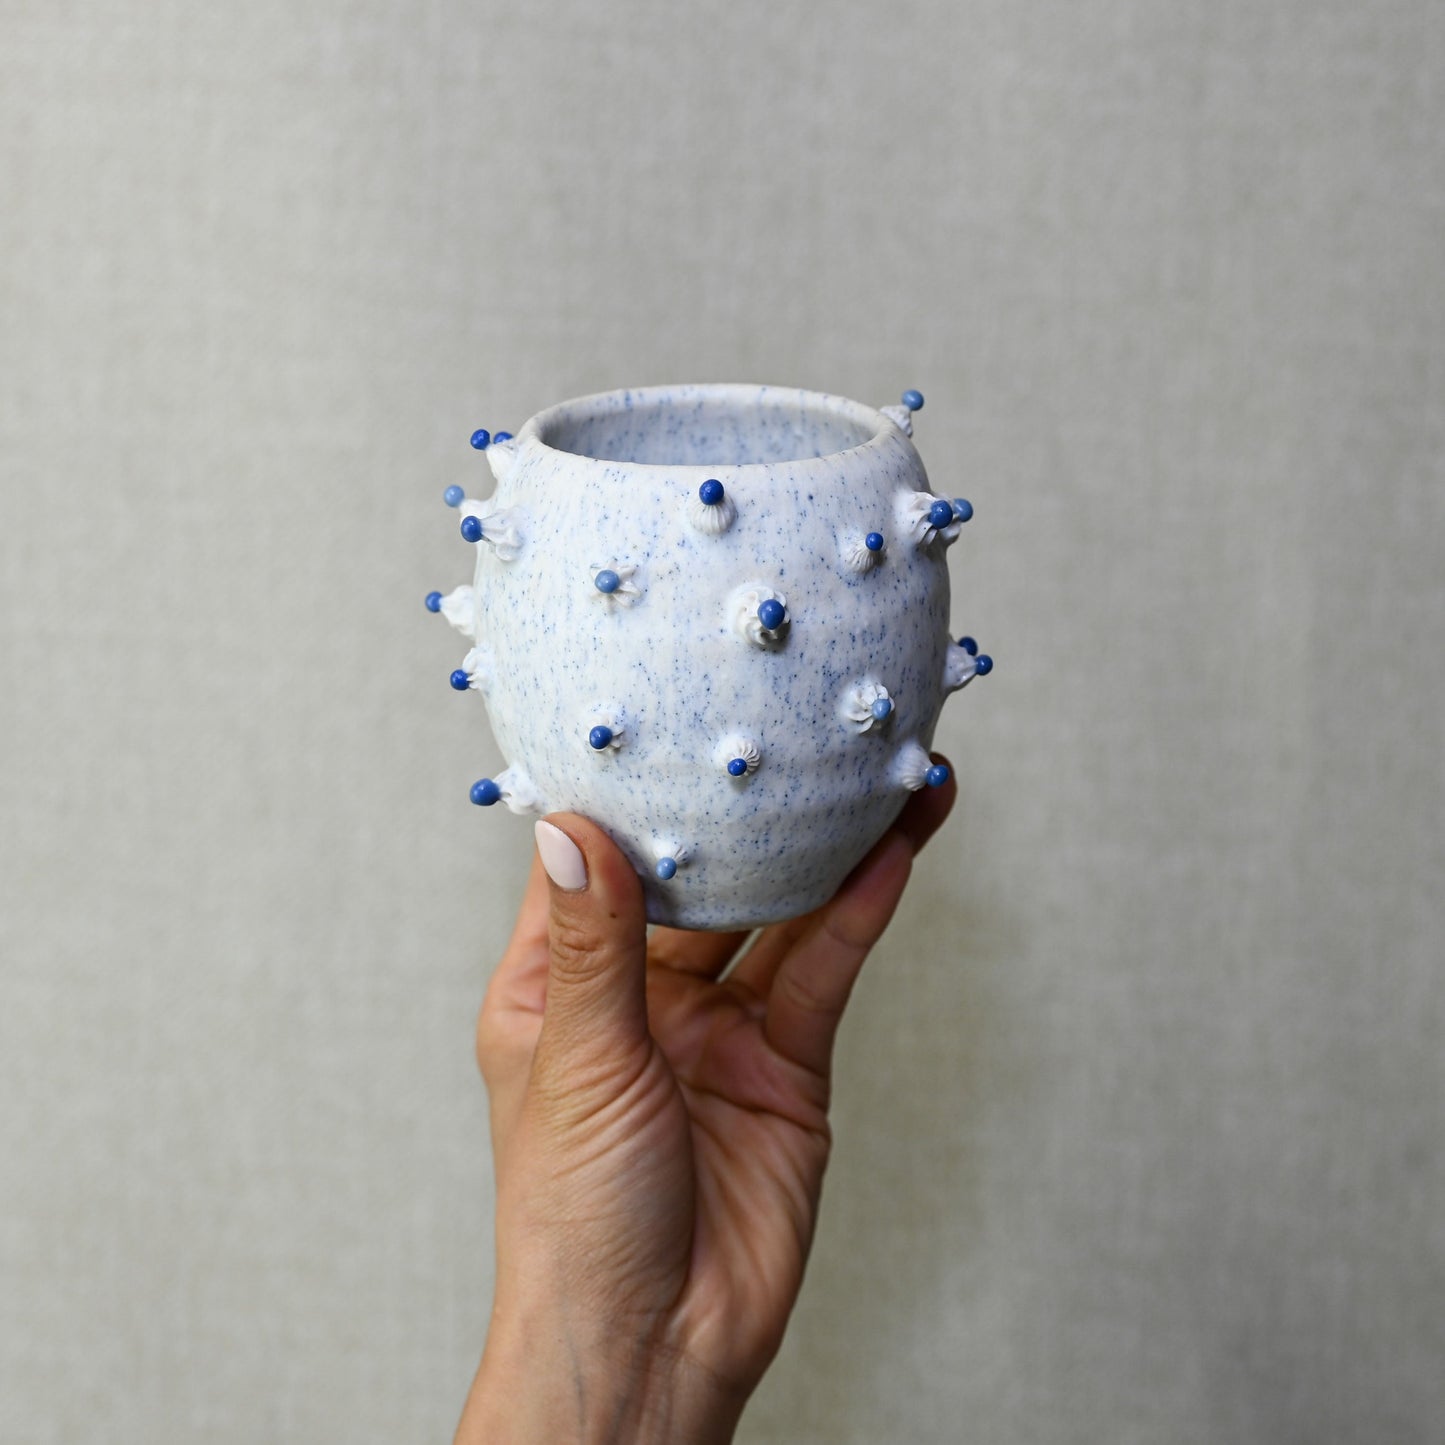 Cup Shape Cake Vessel - Stoneware & Porcelain